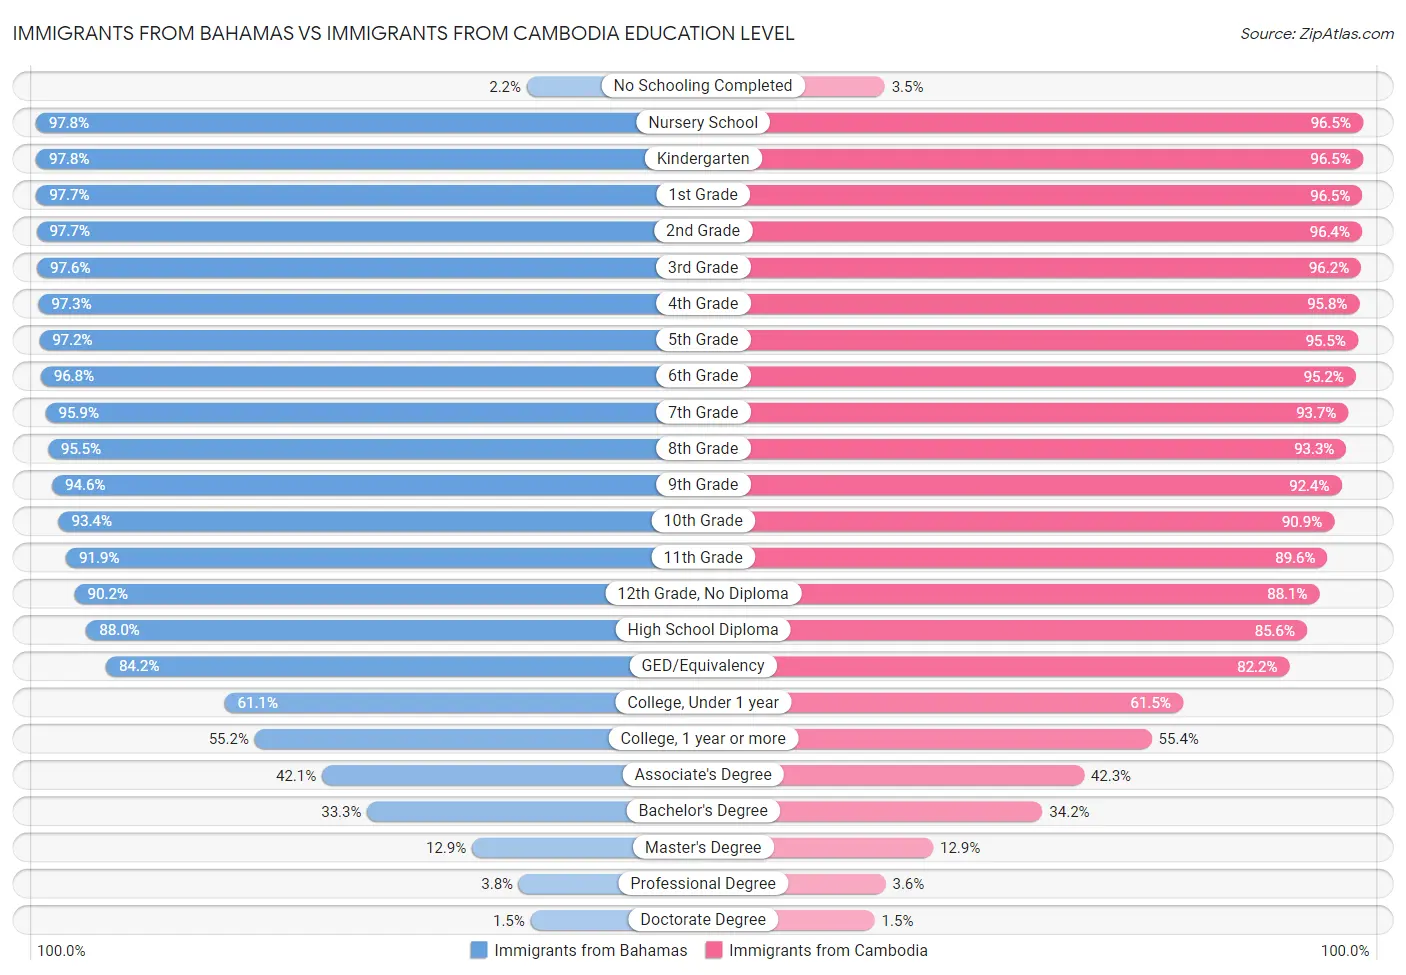 Immigrants from Bahamas vs Immigrants from Cambodia Education Level